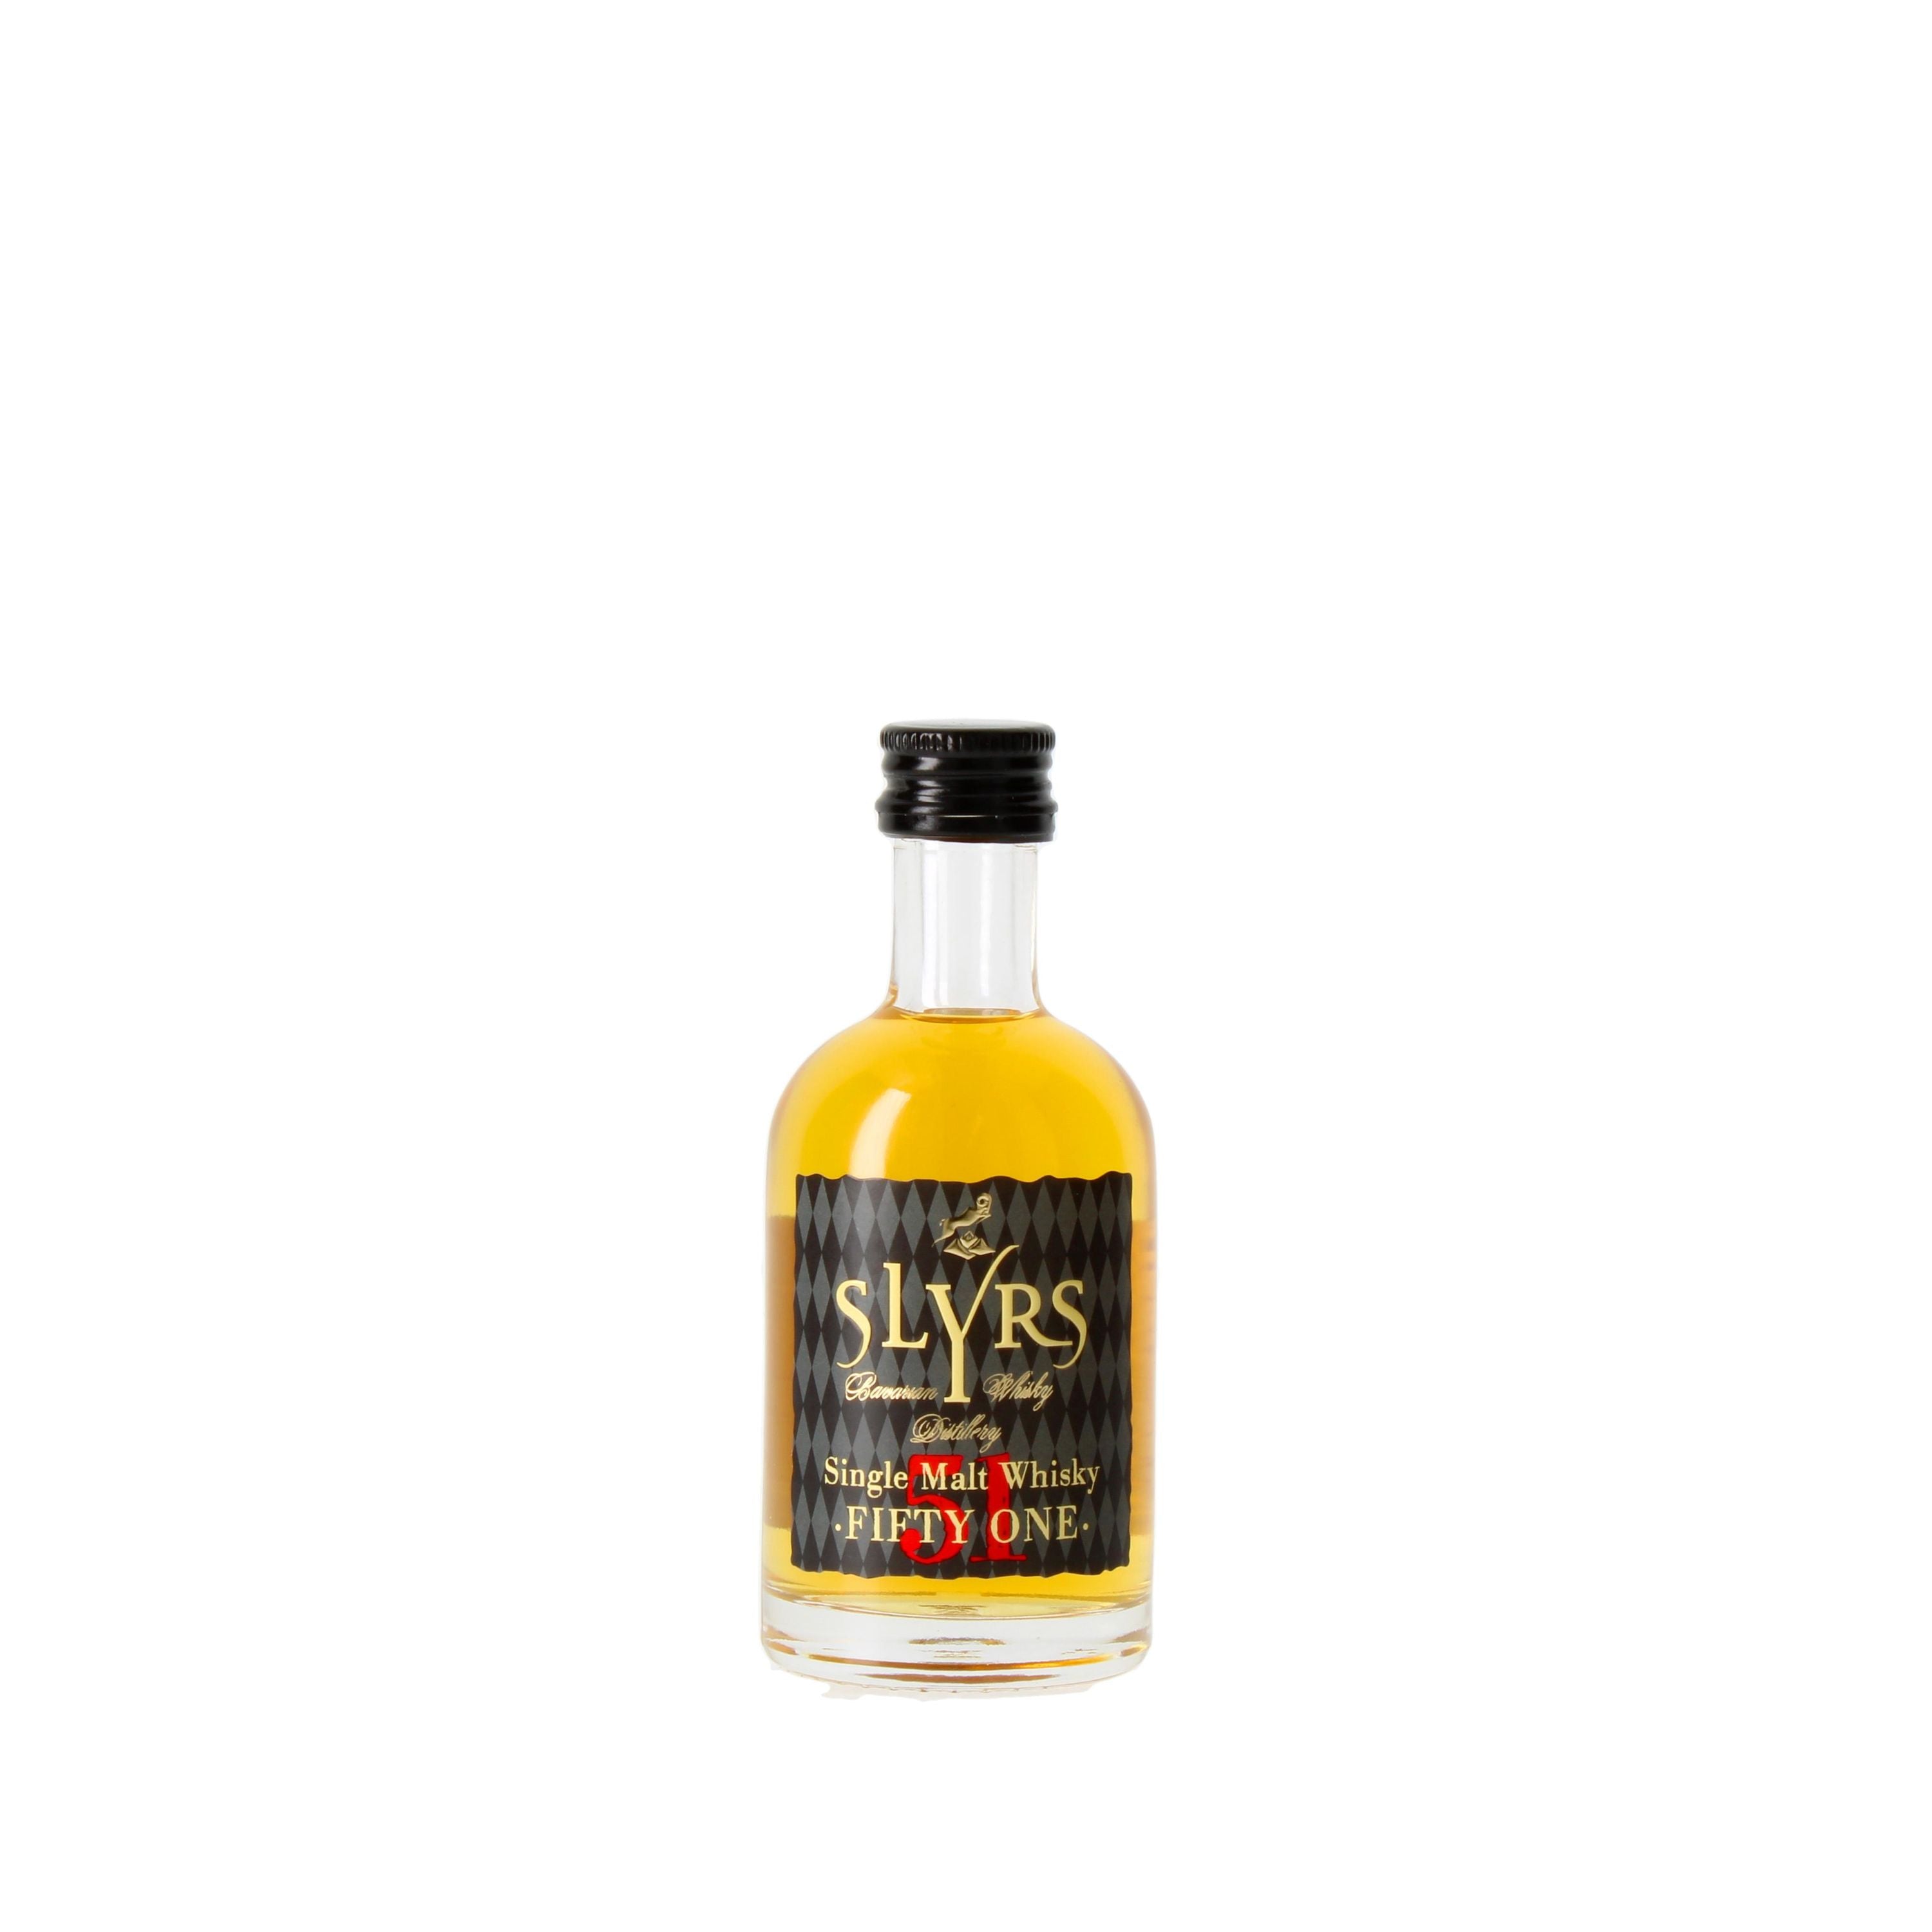 Slyrs Fifty One Single Malt Whisky Miniature 0,05l, alk. 51 % tilavuudesta,